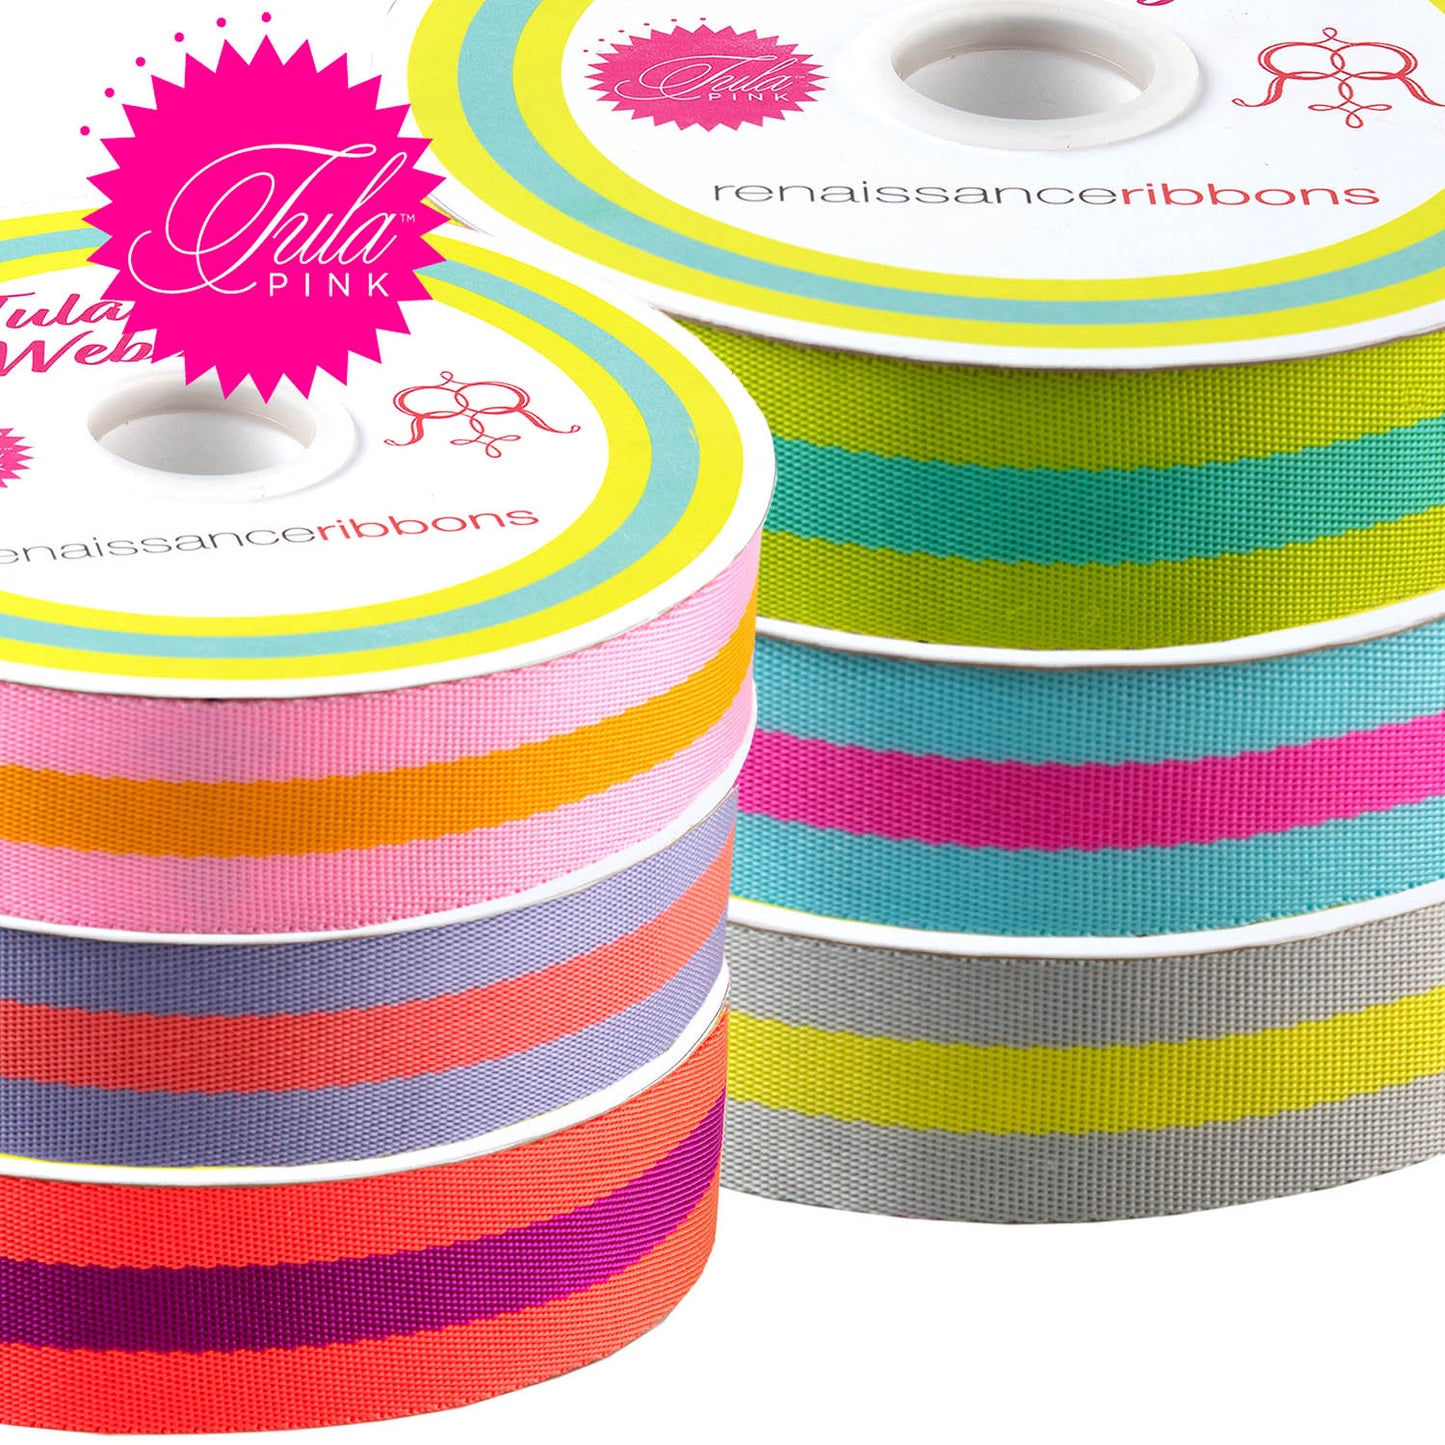 Tula Pink 1.5" x 2 Yards Nylon Webbing Grey and Yellow Stripes from Renaissance Ribbons for Sewing, Crafting, Bag Making